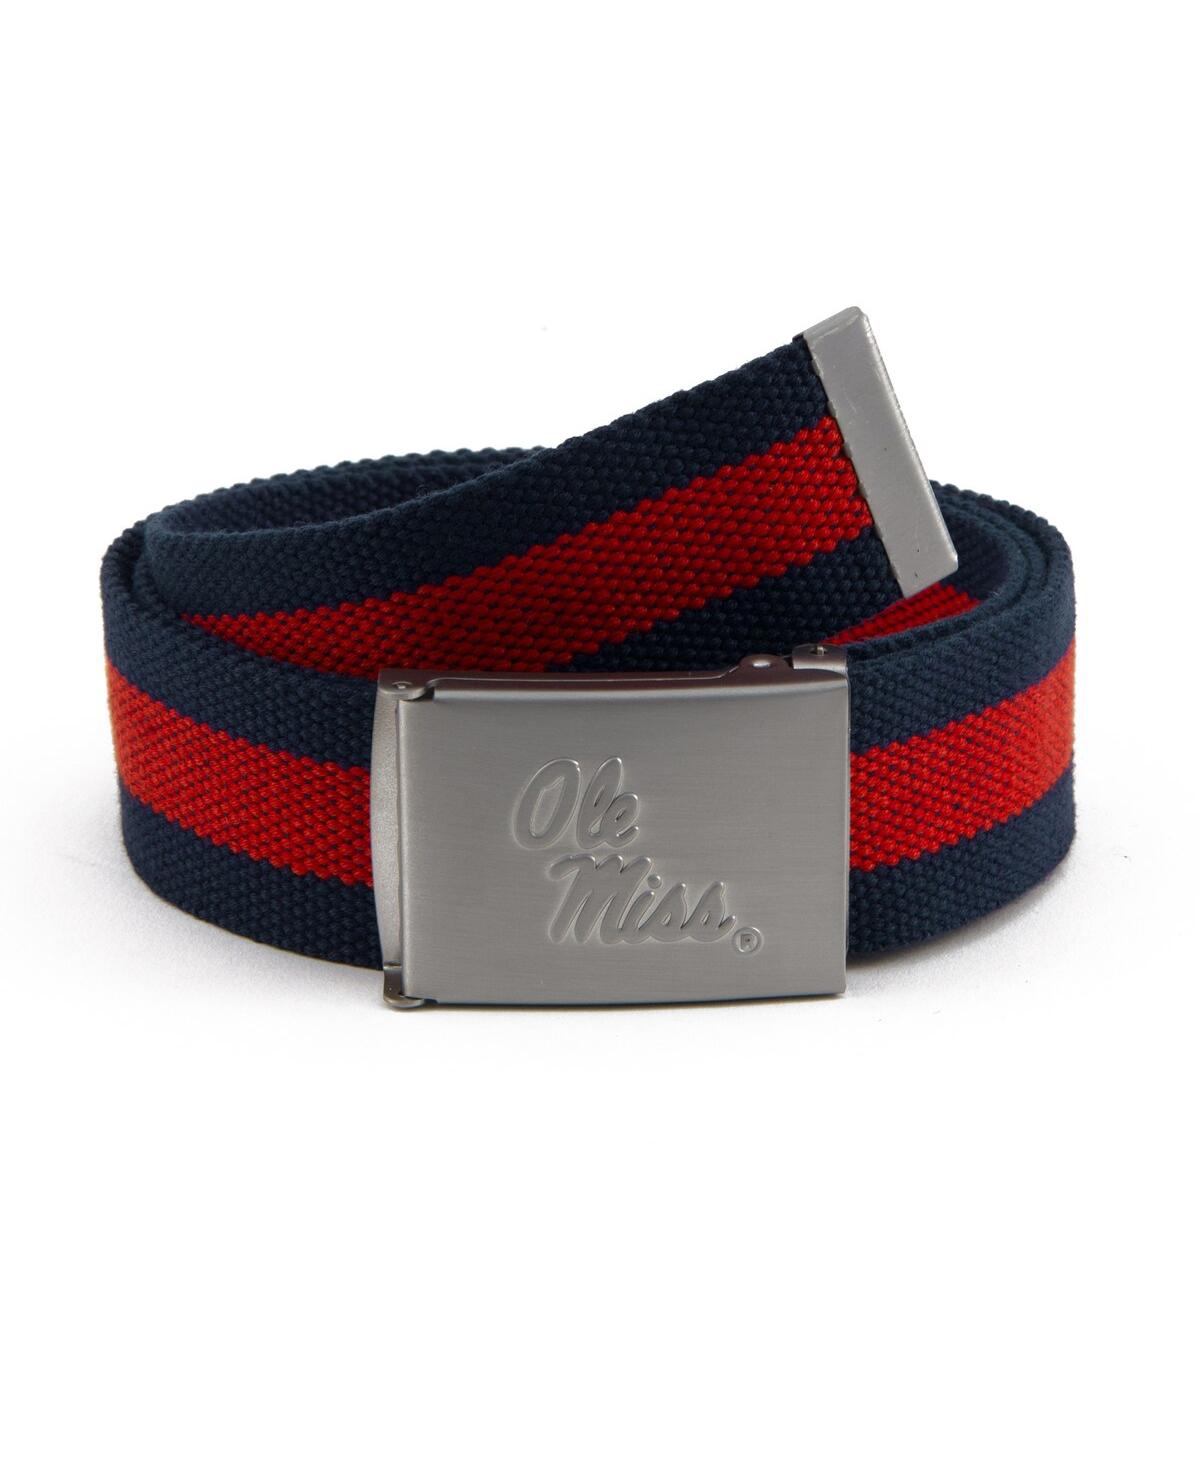 Men's Ole Miss Rebels Fabric Belt - Navy, Red